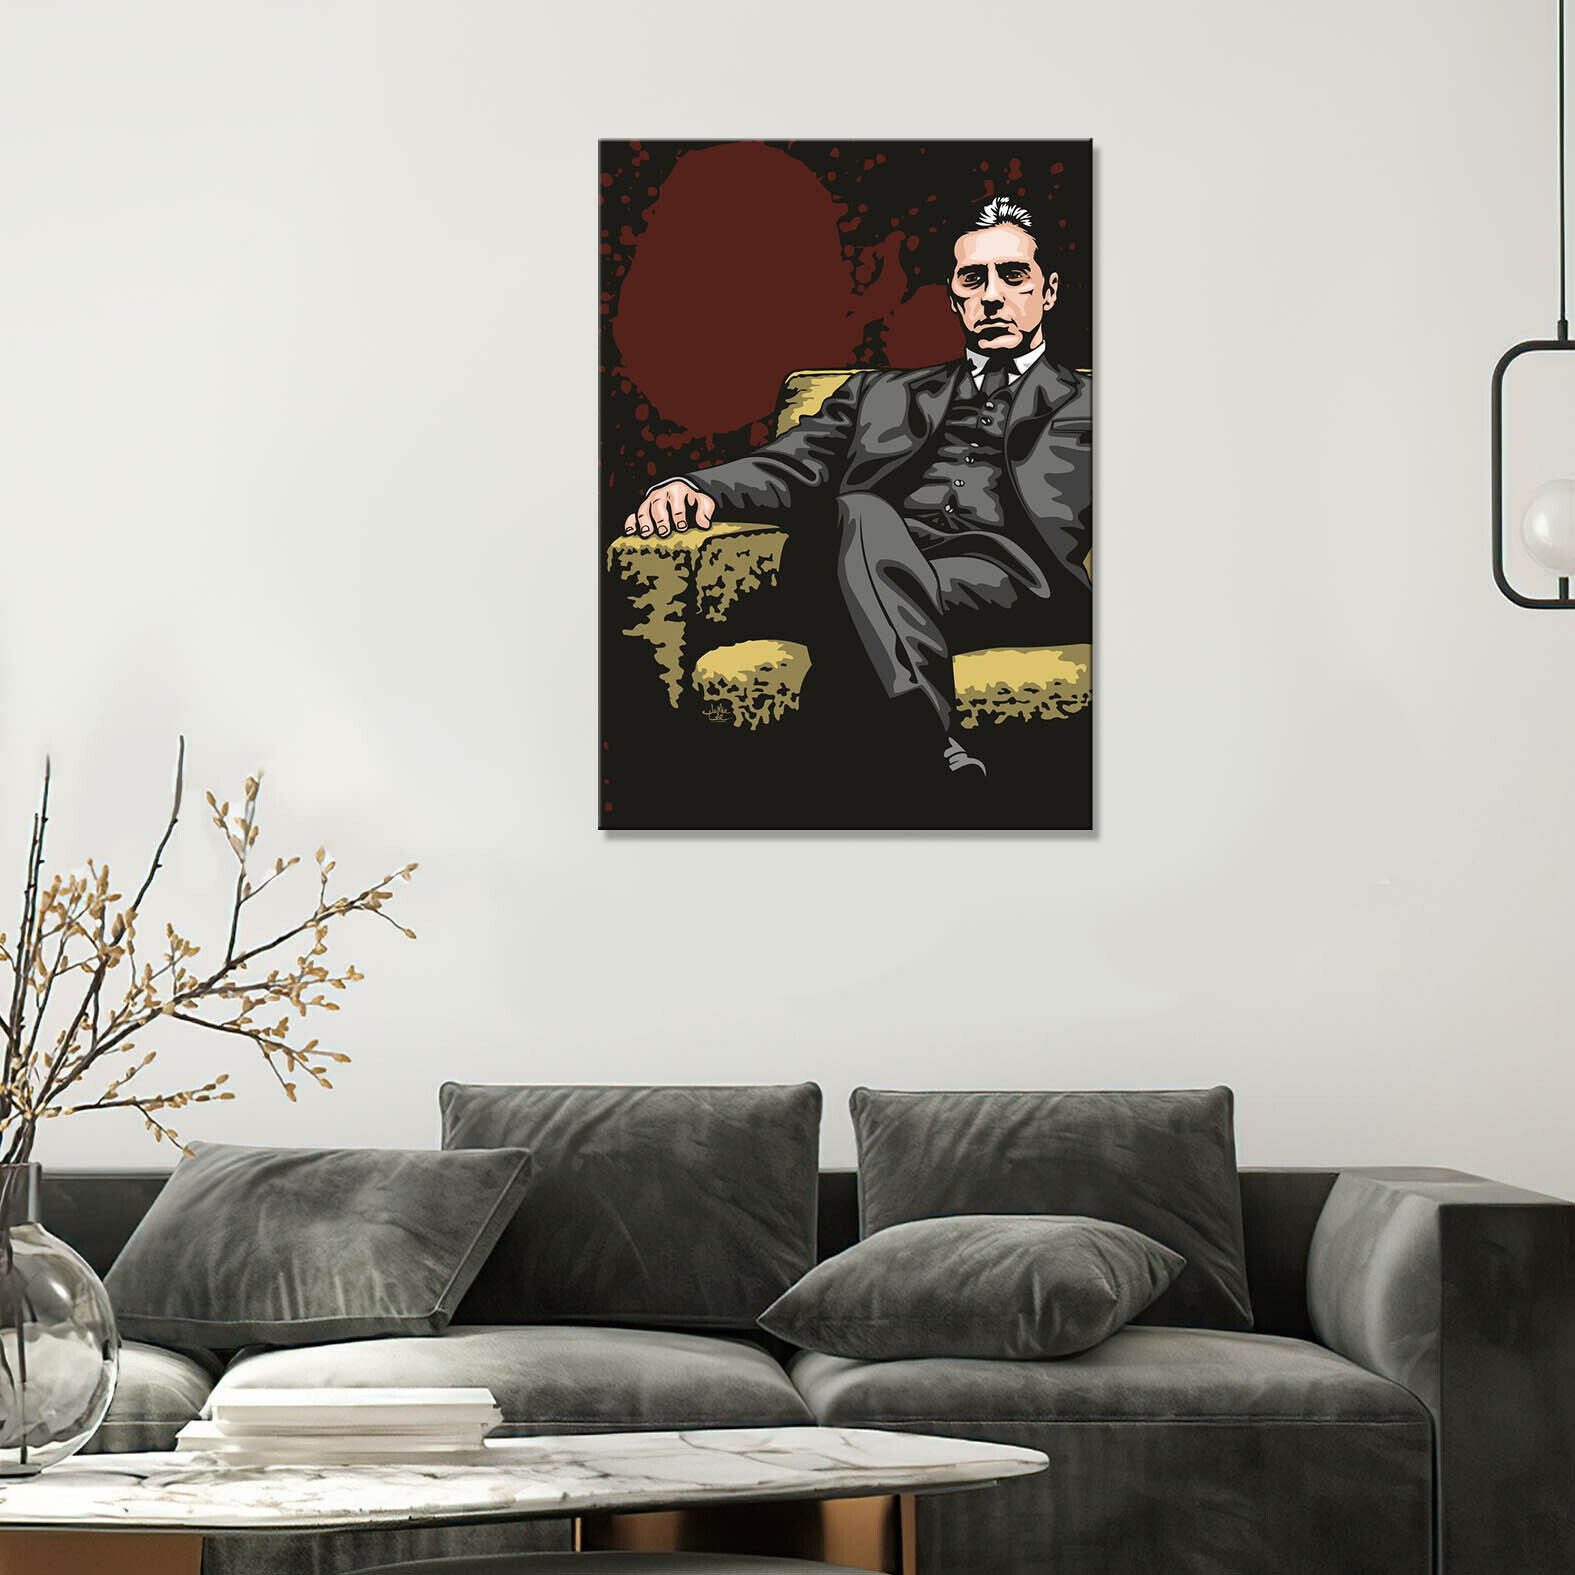 Интерьерная картина на холсте/ картина на стену/ в гостиную /спальню/ - Майкл Корлеоне арт 50х70